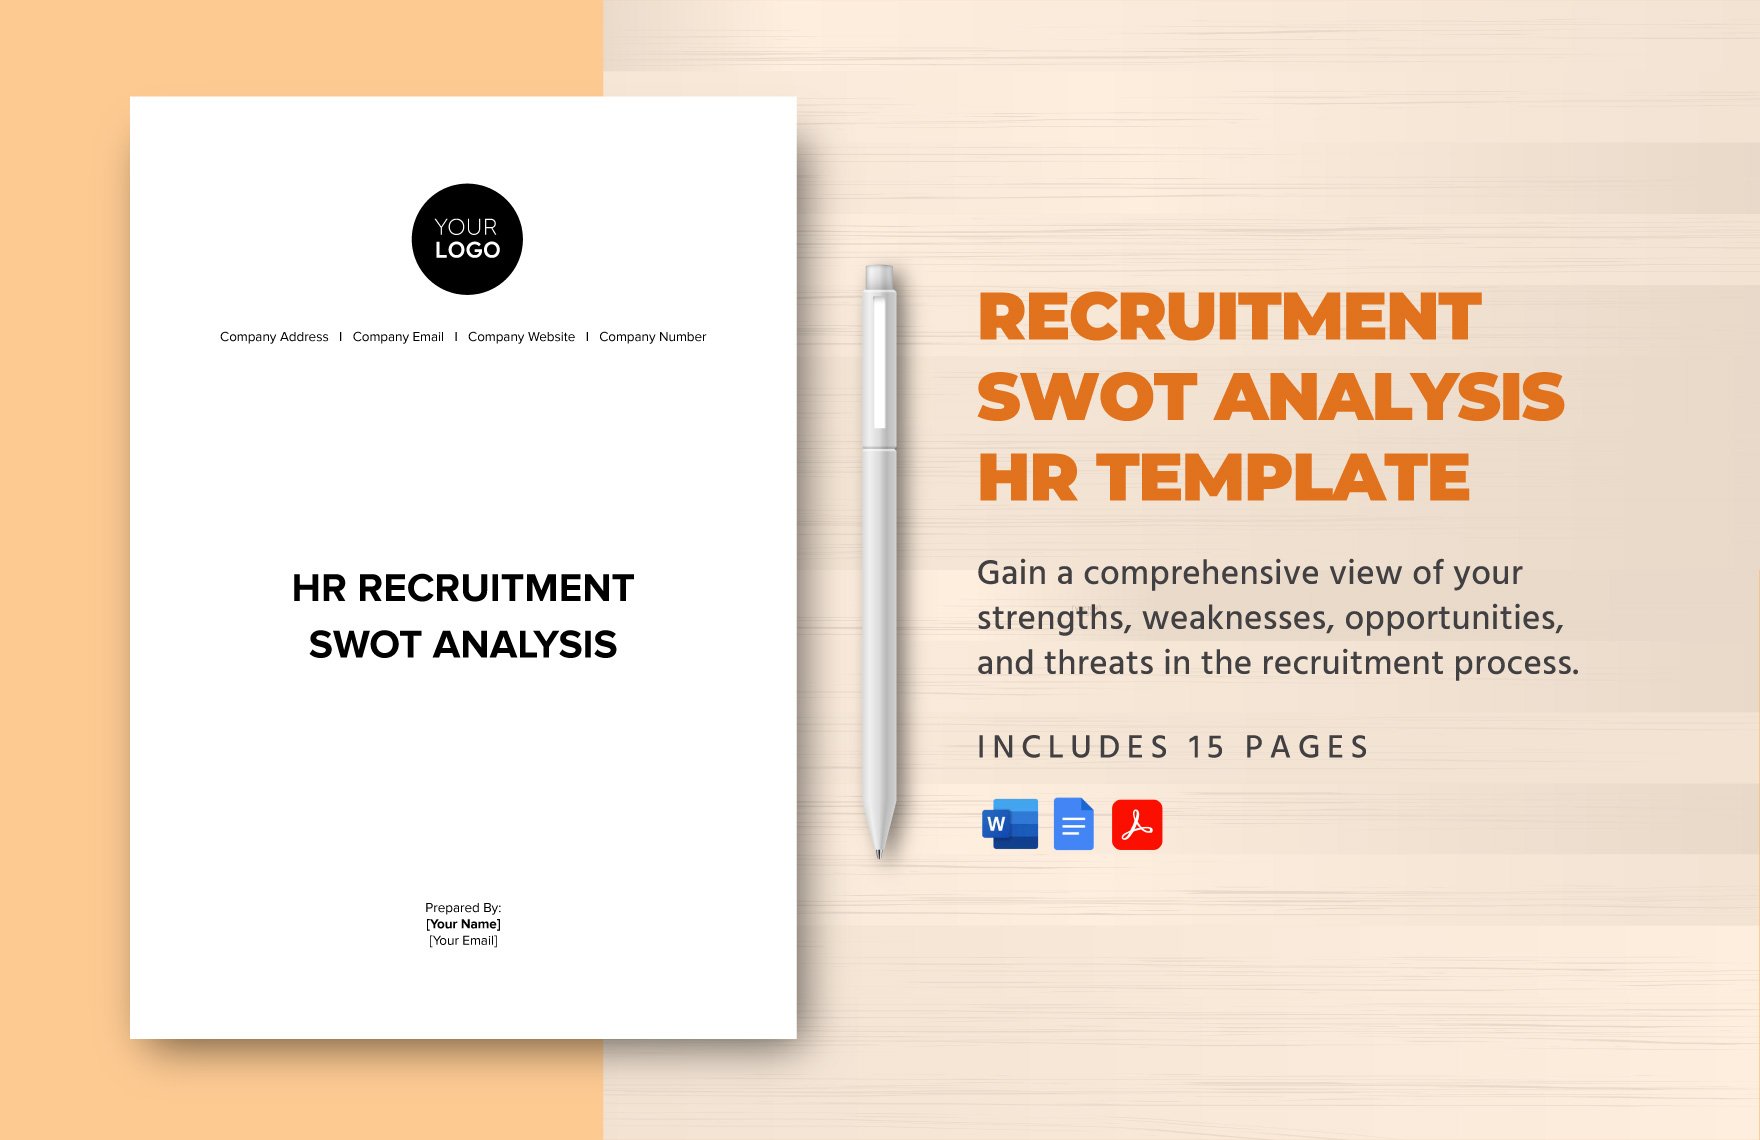 Recruitment SWOT Analysis HR Template